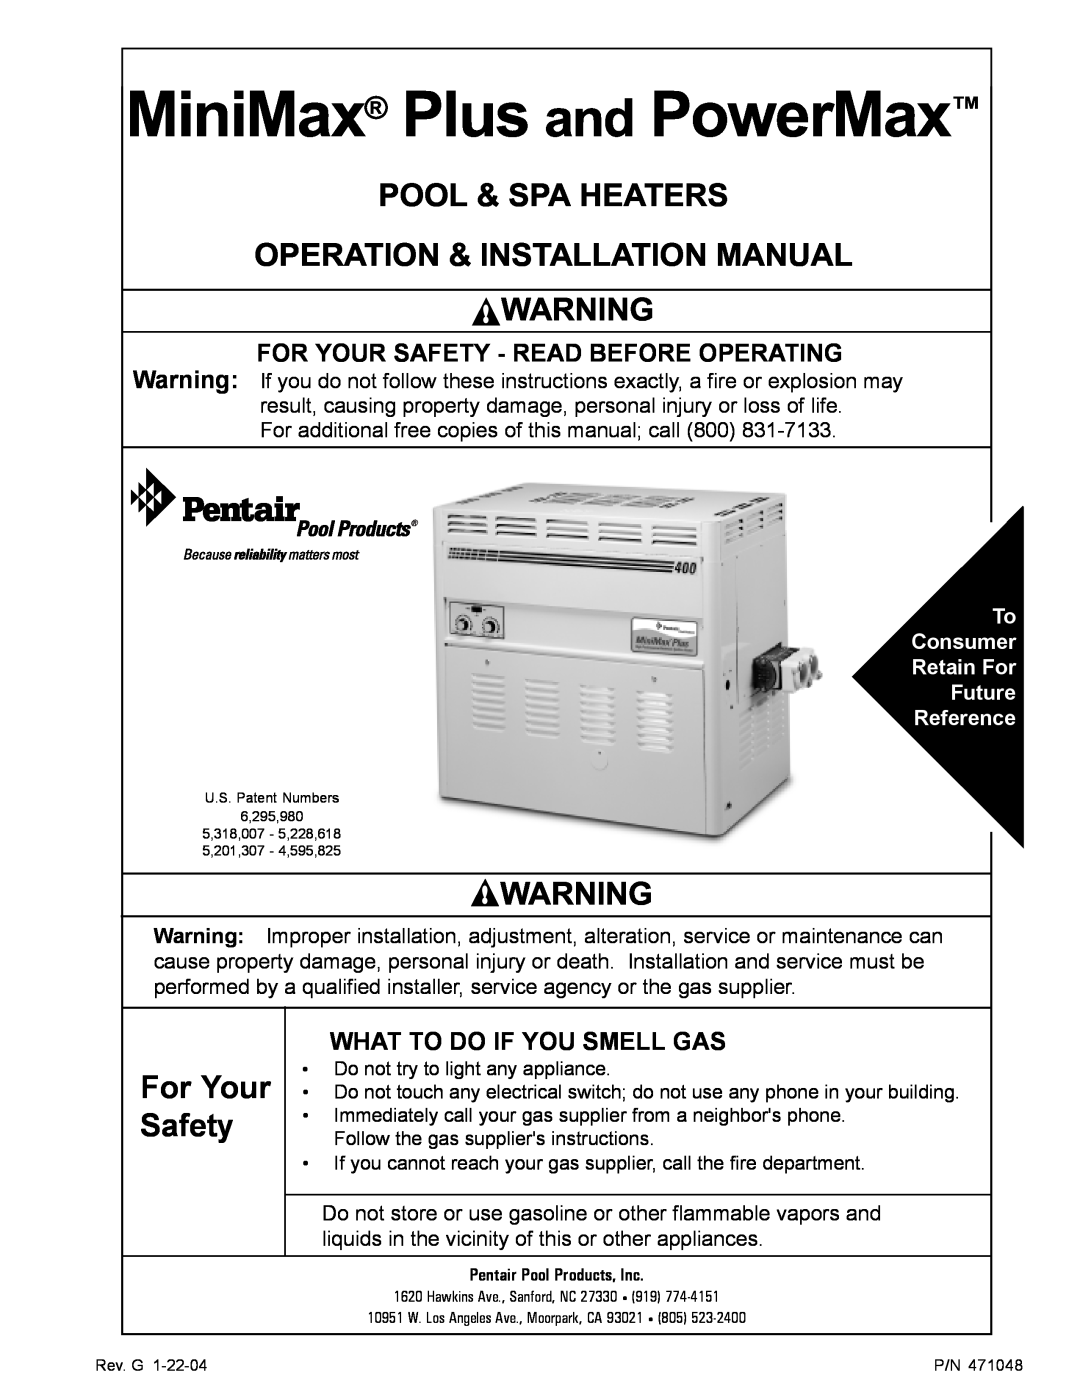 Pentair 100 installation manual MiniMax Plus and PowerMax, Pool & Spa Heaters Operation & Installation Manual 